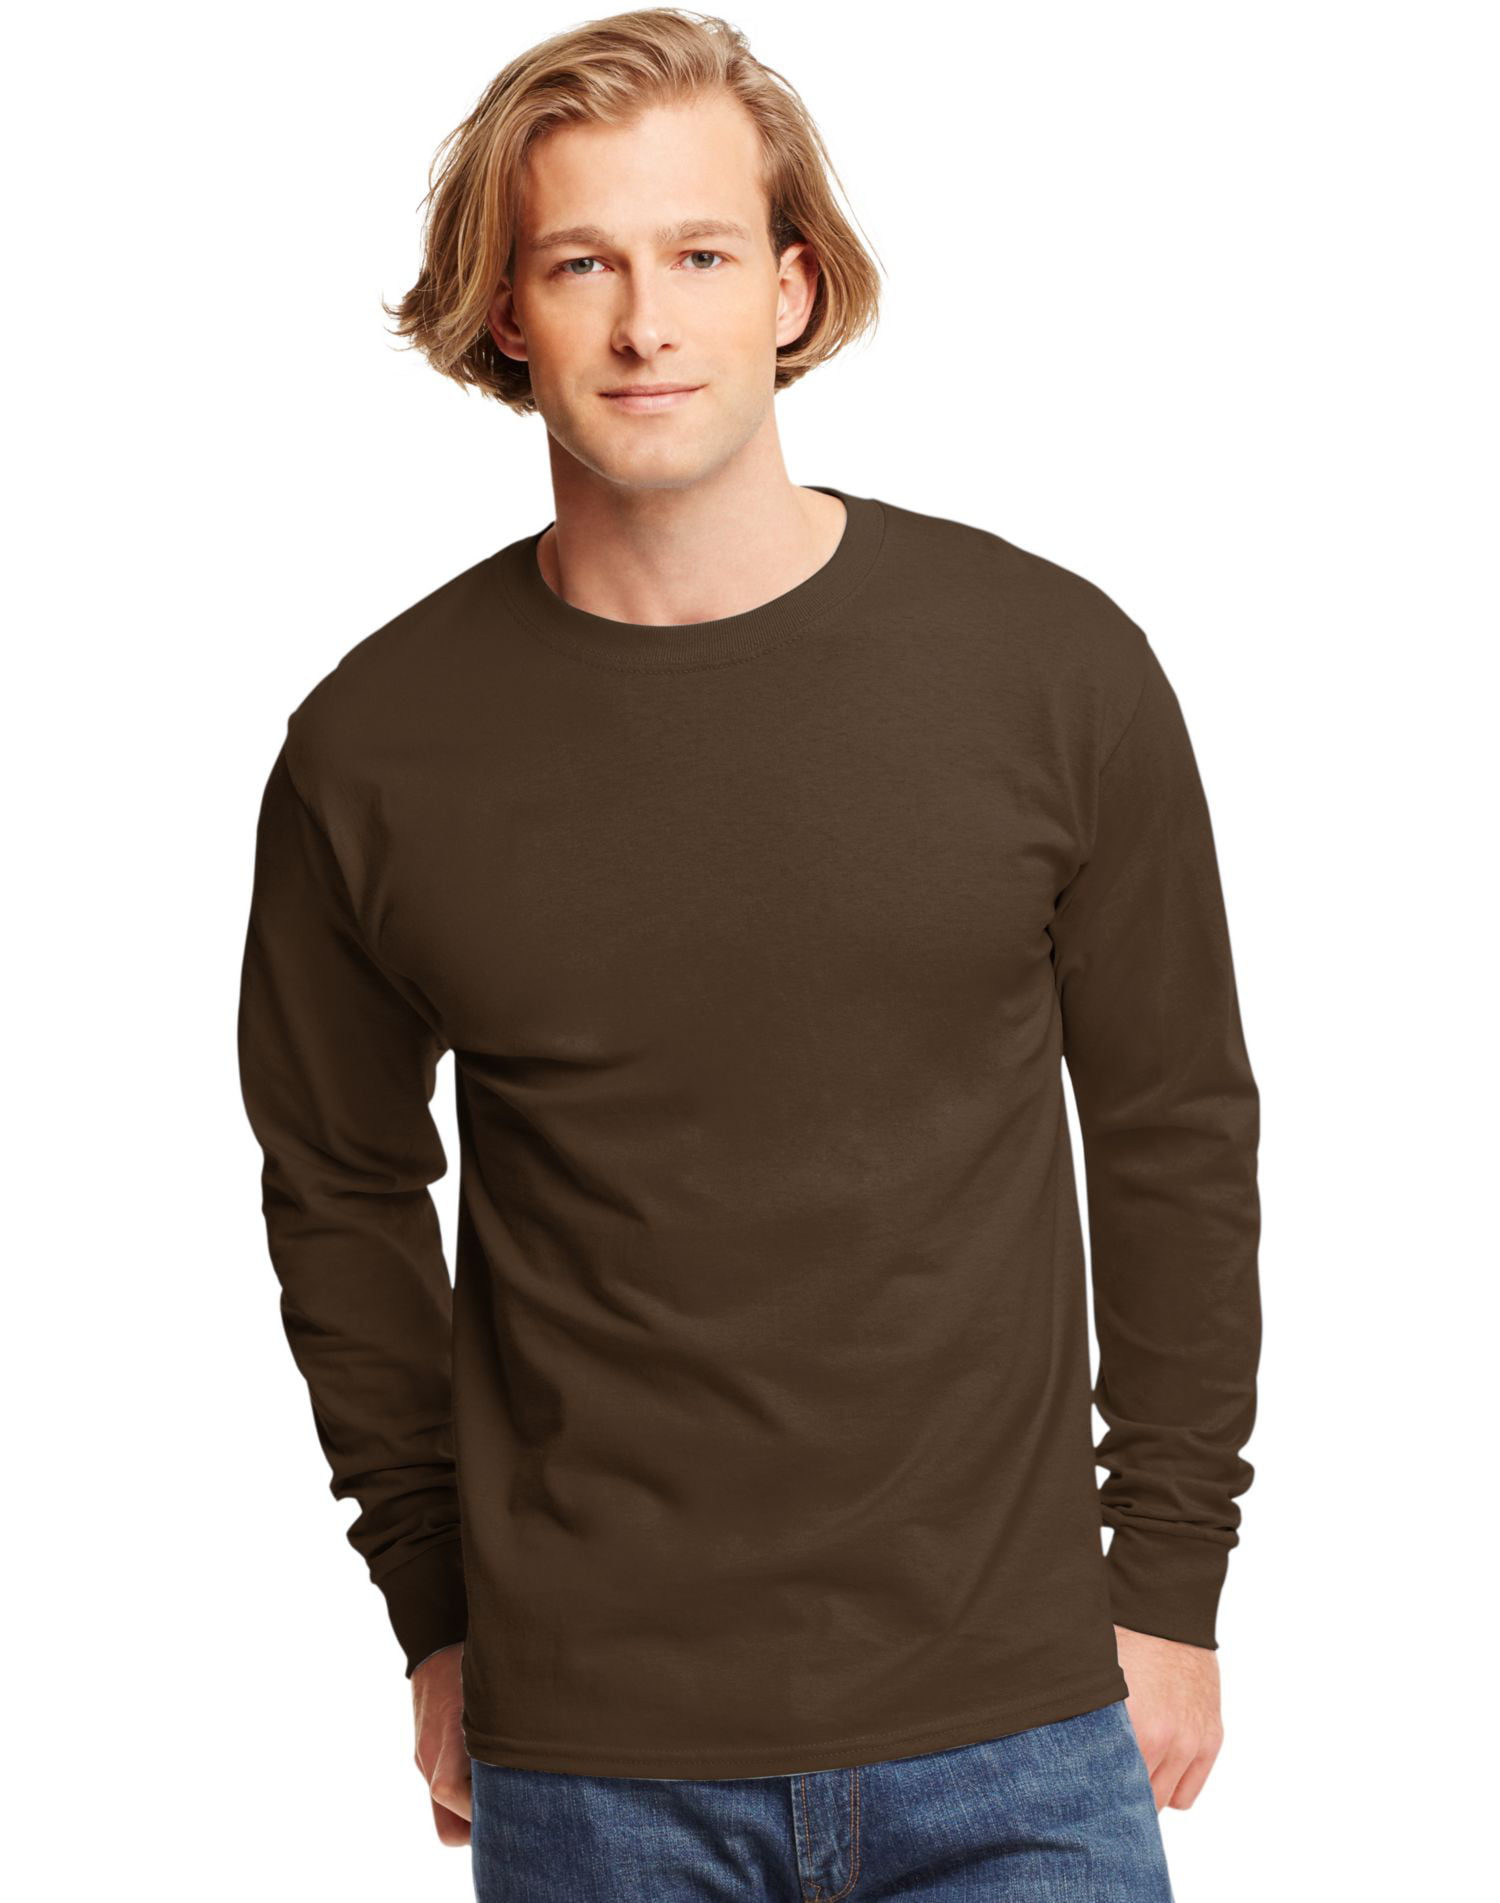 Hanes - 5586 Tagless Long-Sleeve T-Shirt Size Medium, Dark Chocolate ...